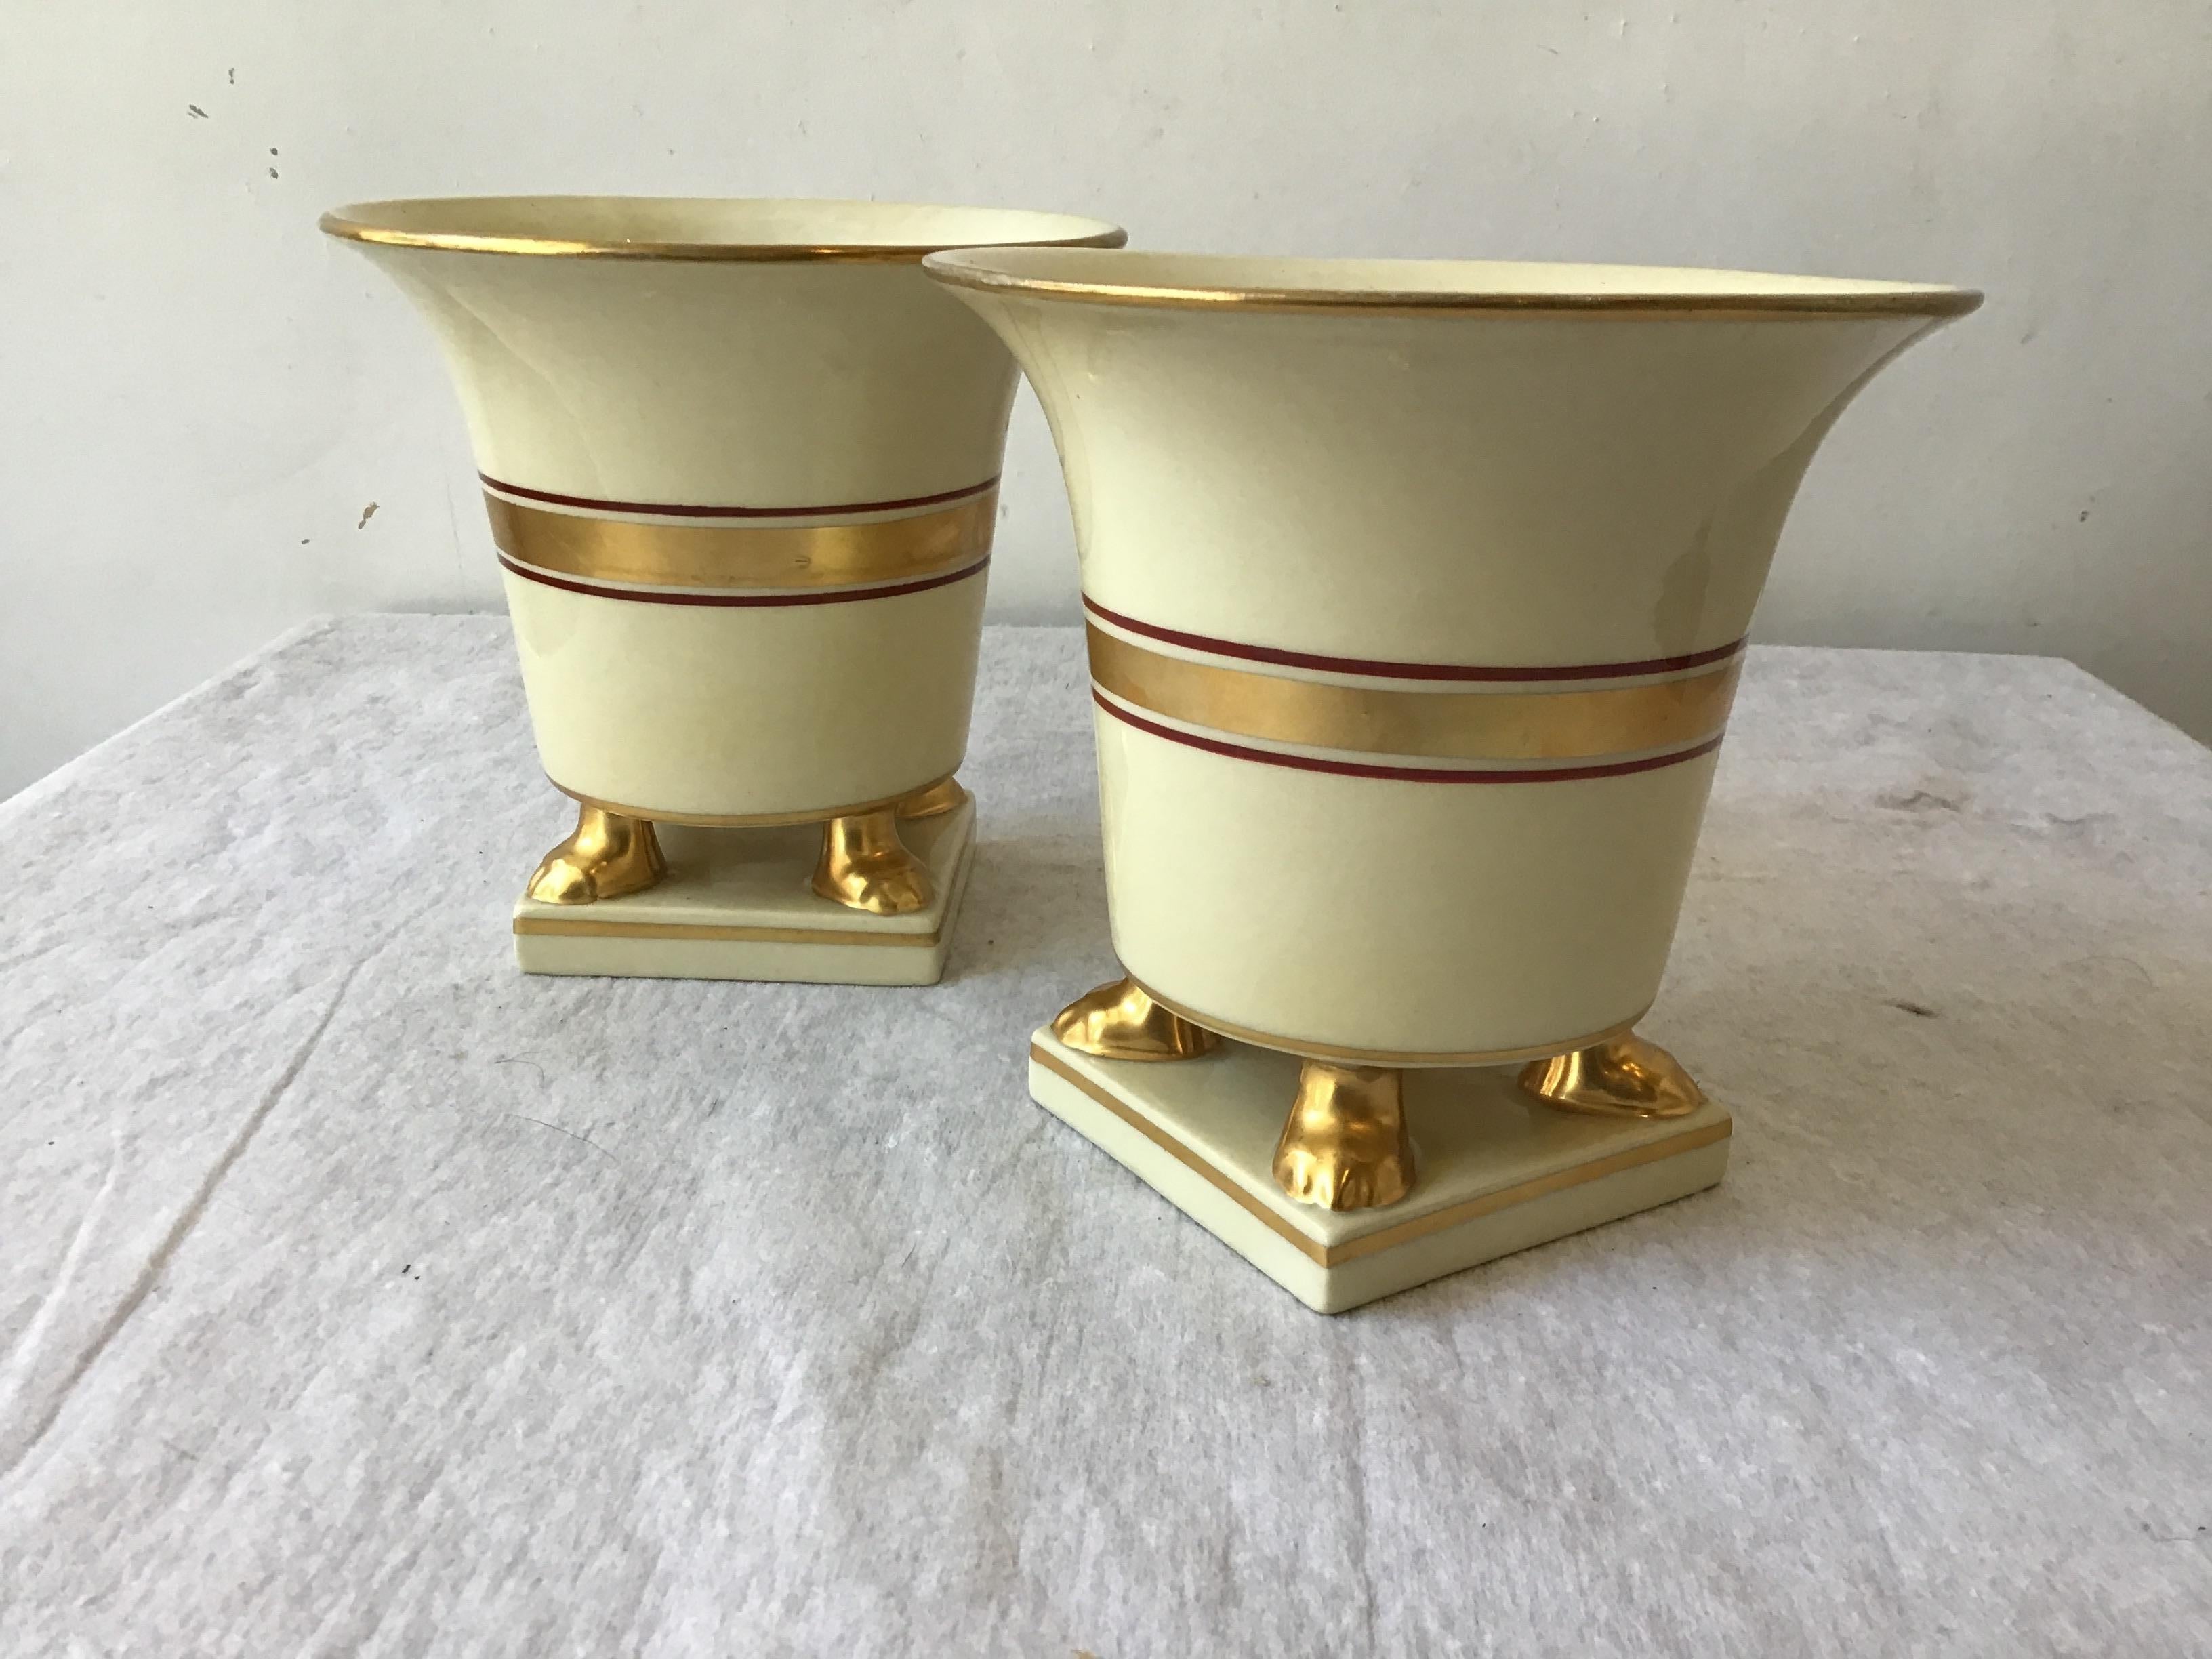 Pair of classical ceramic cache pots. Gilt accents.